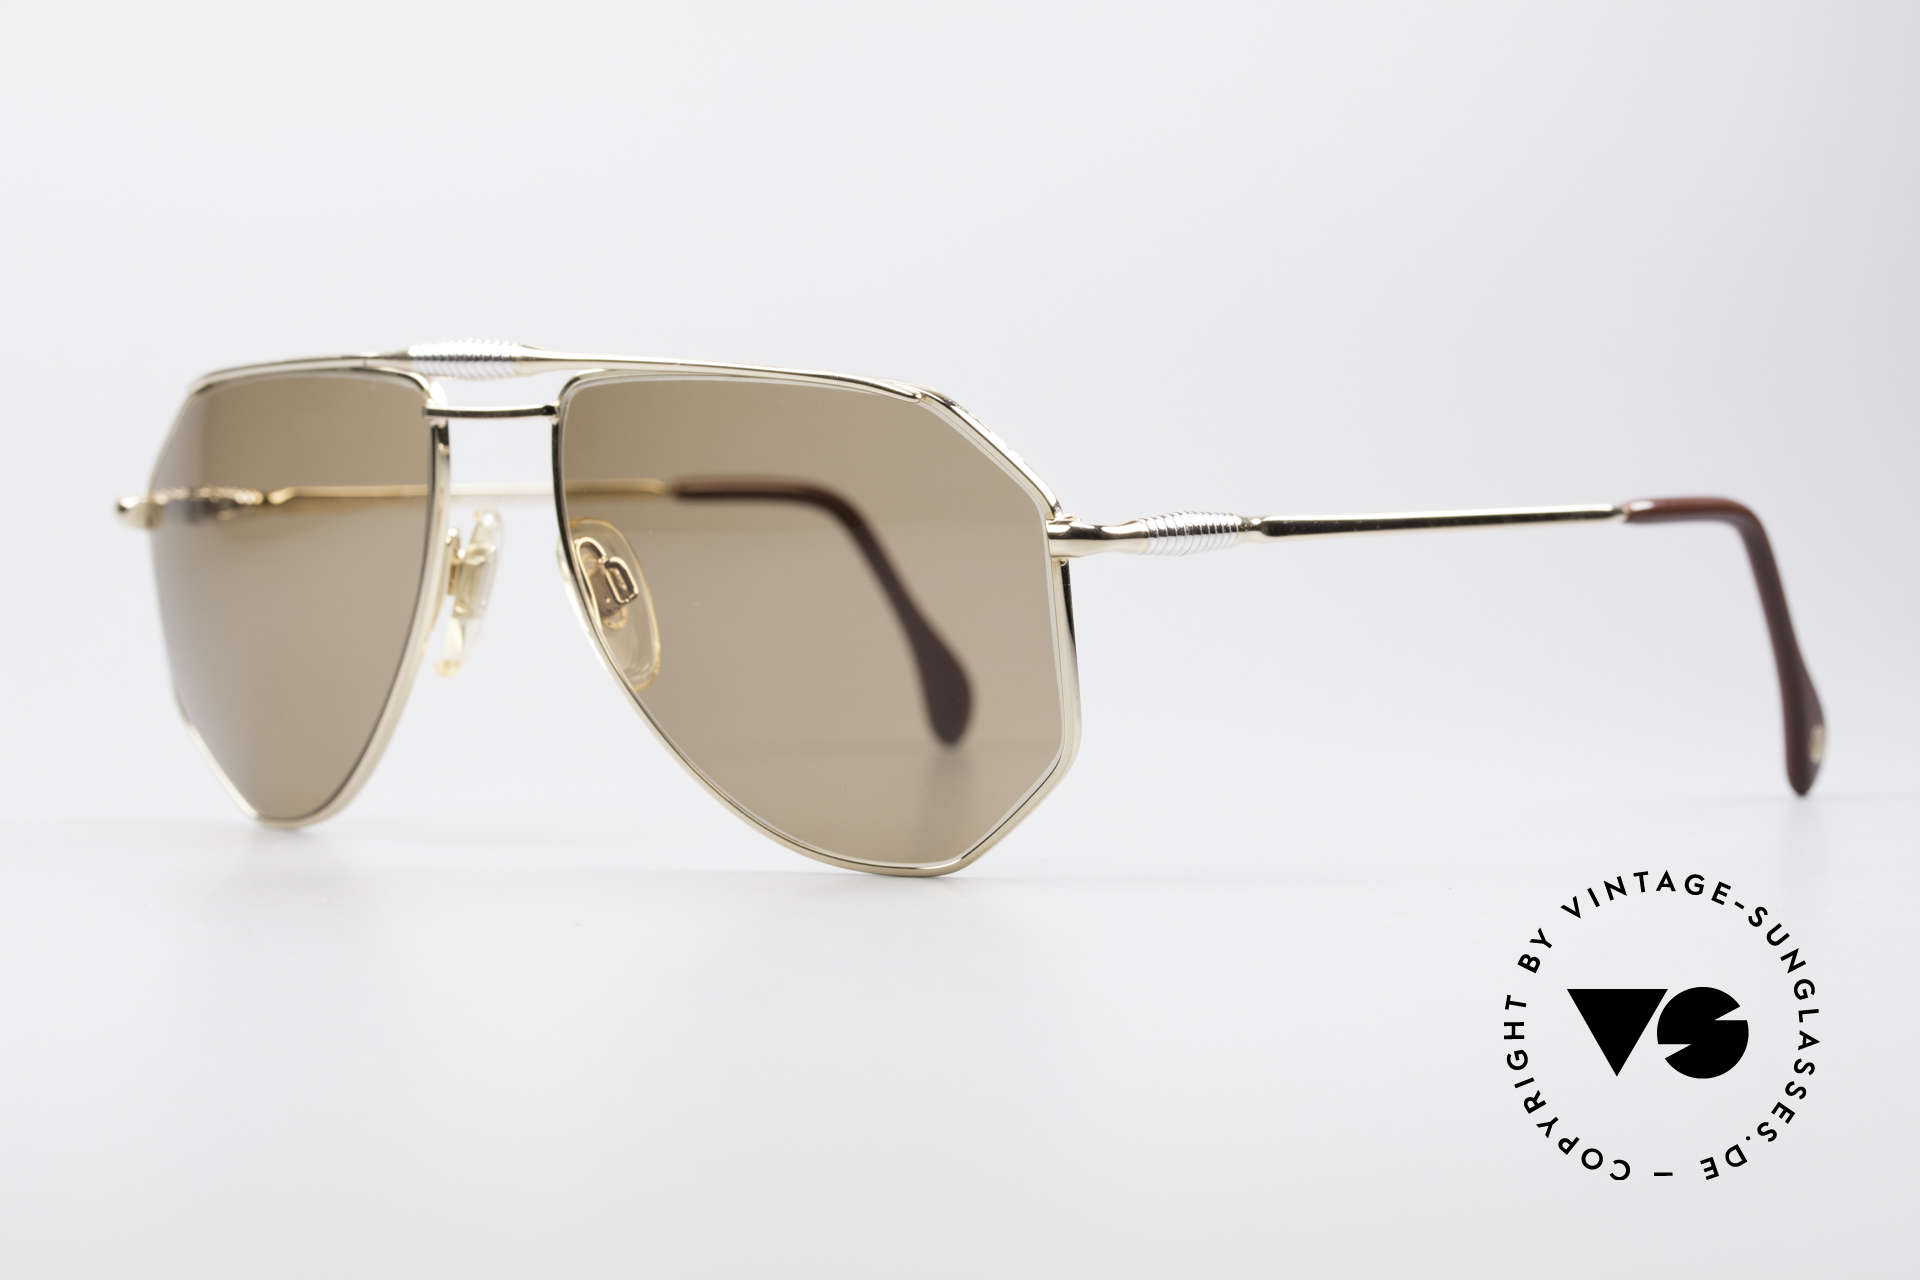 Zollitsch Cadre 120 Medium 80's Men's Sunglasses, an interesting alternative to the ordinary 'aviator style', Made for Men